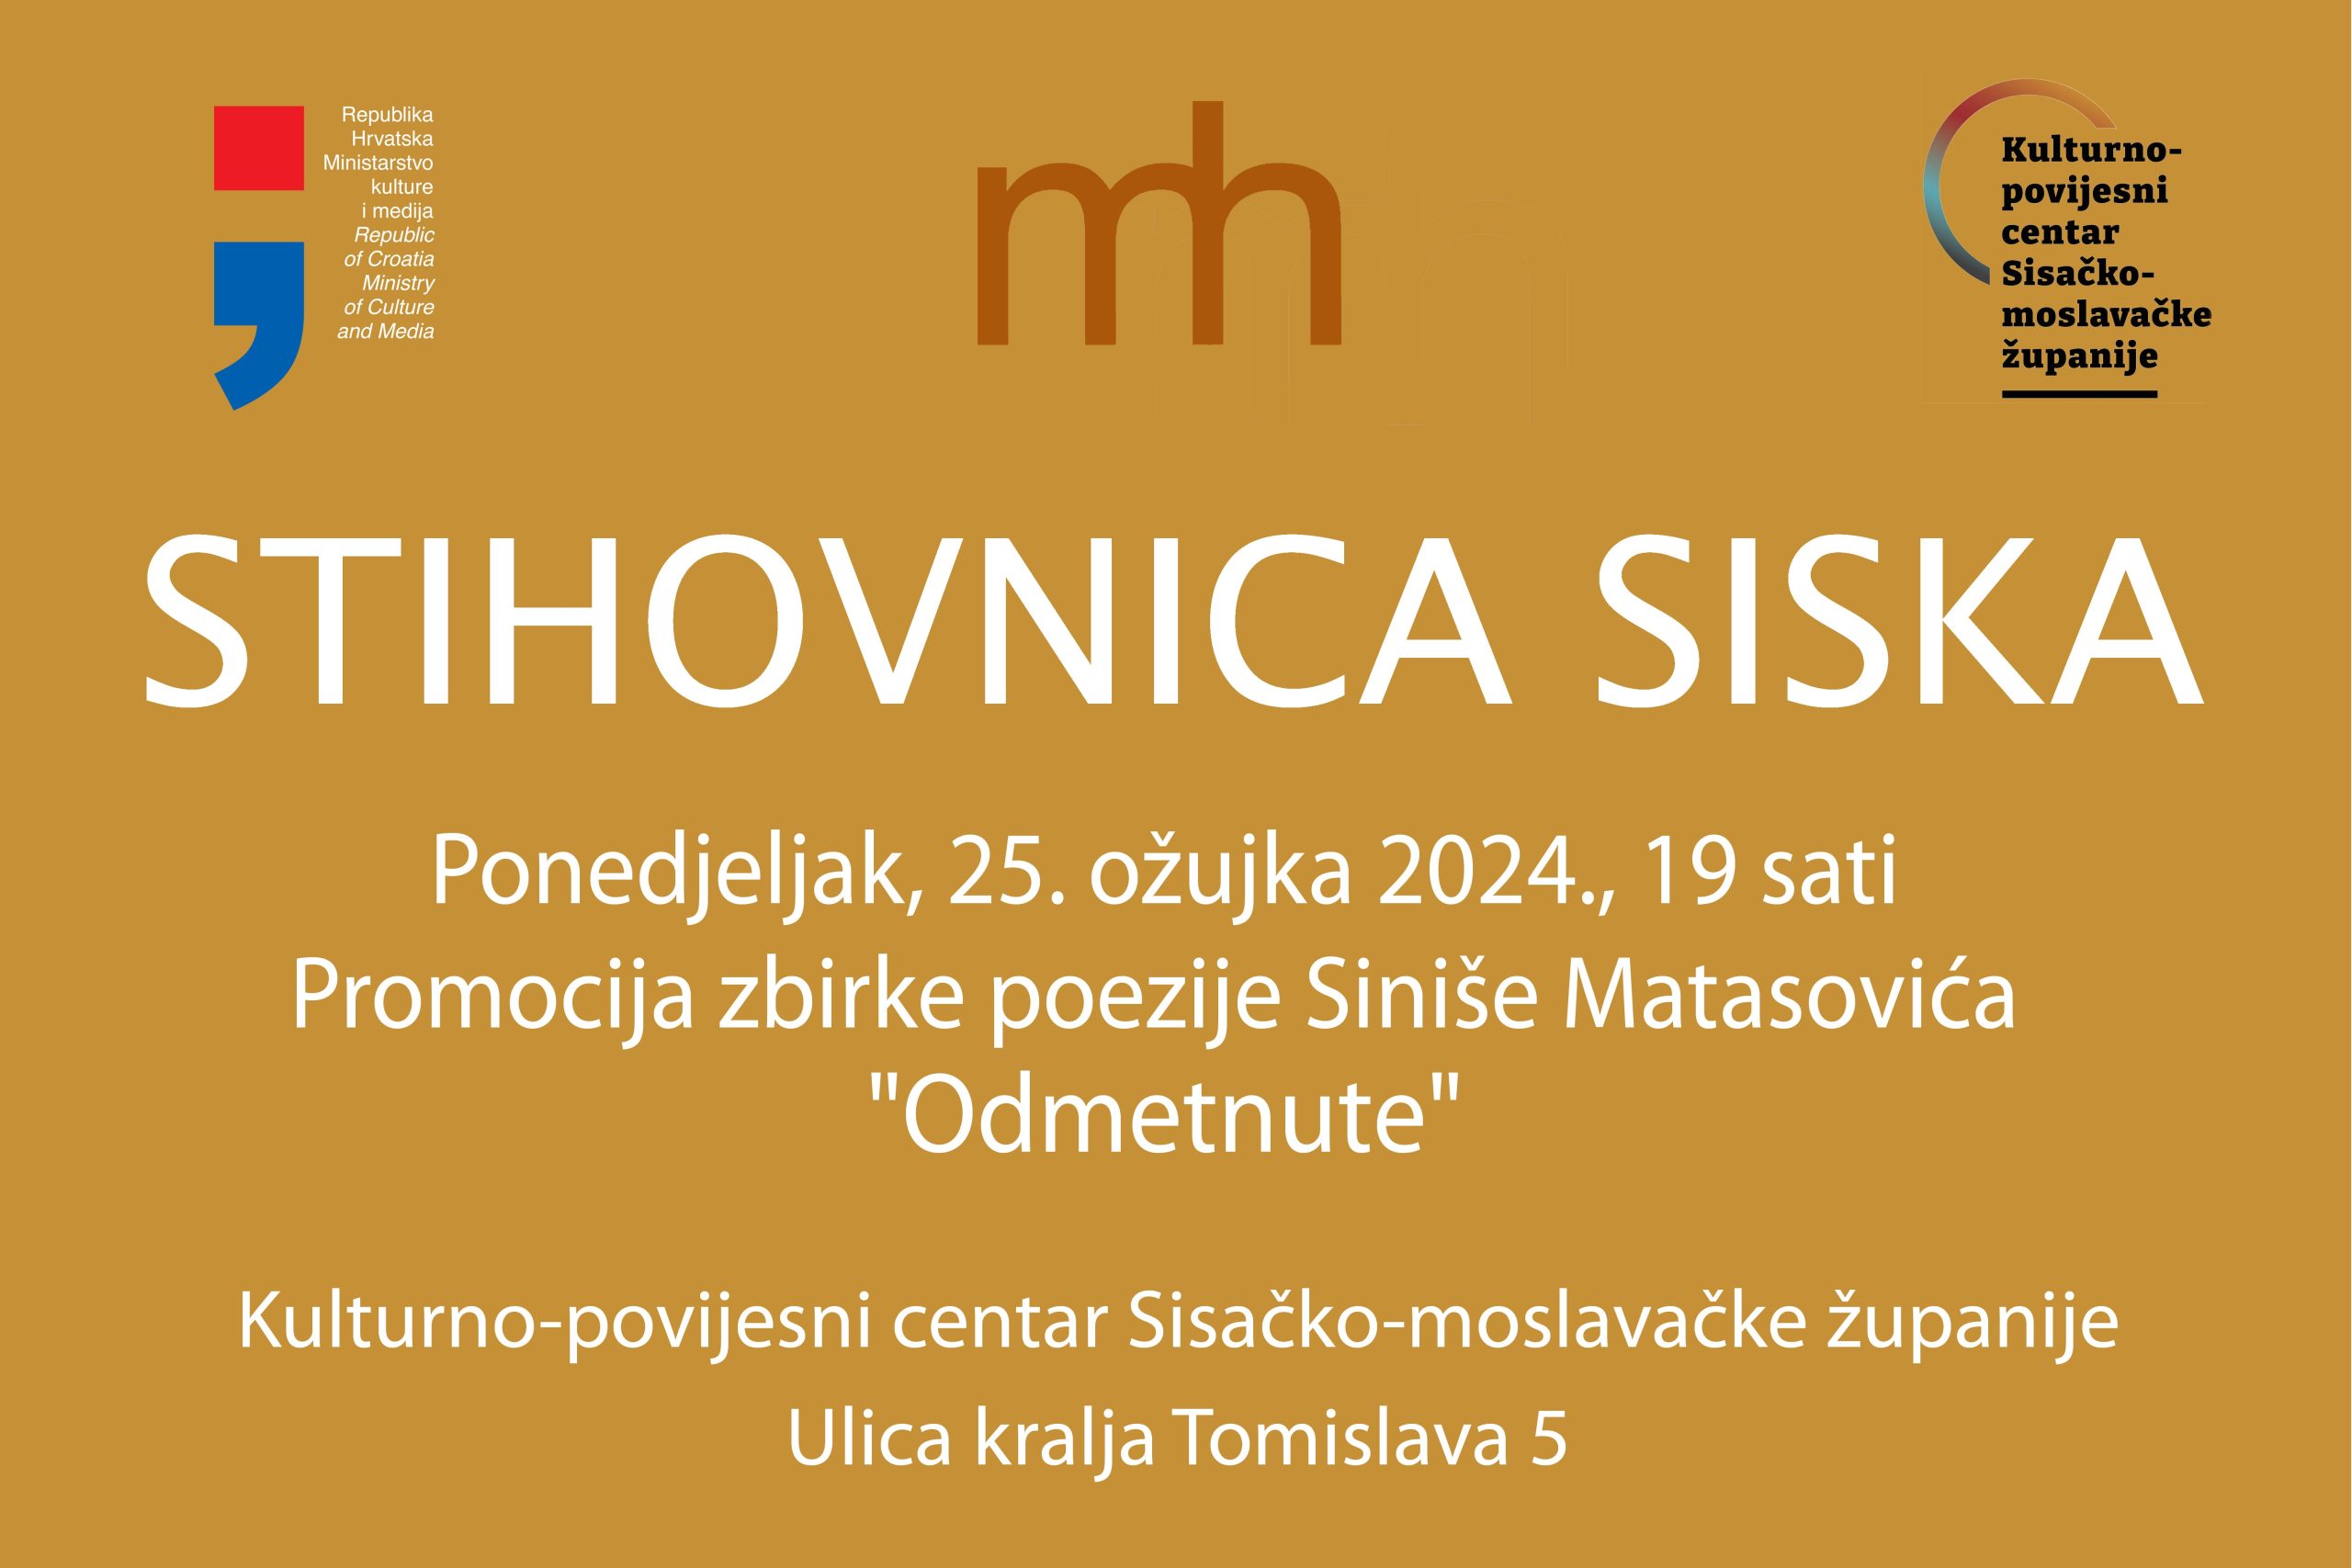 You are currently viewing Stihovnica Siska 25.3.2024.: promocija zbirke poezije ”Odmetnute” Siniše Matasovića